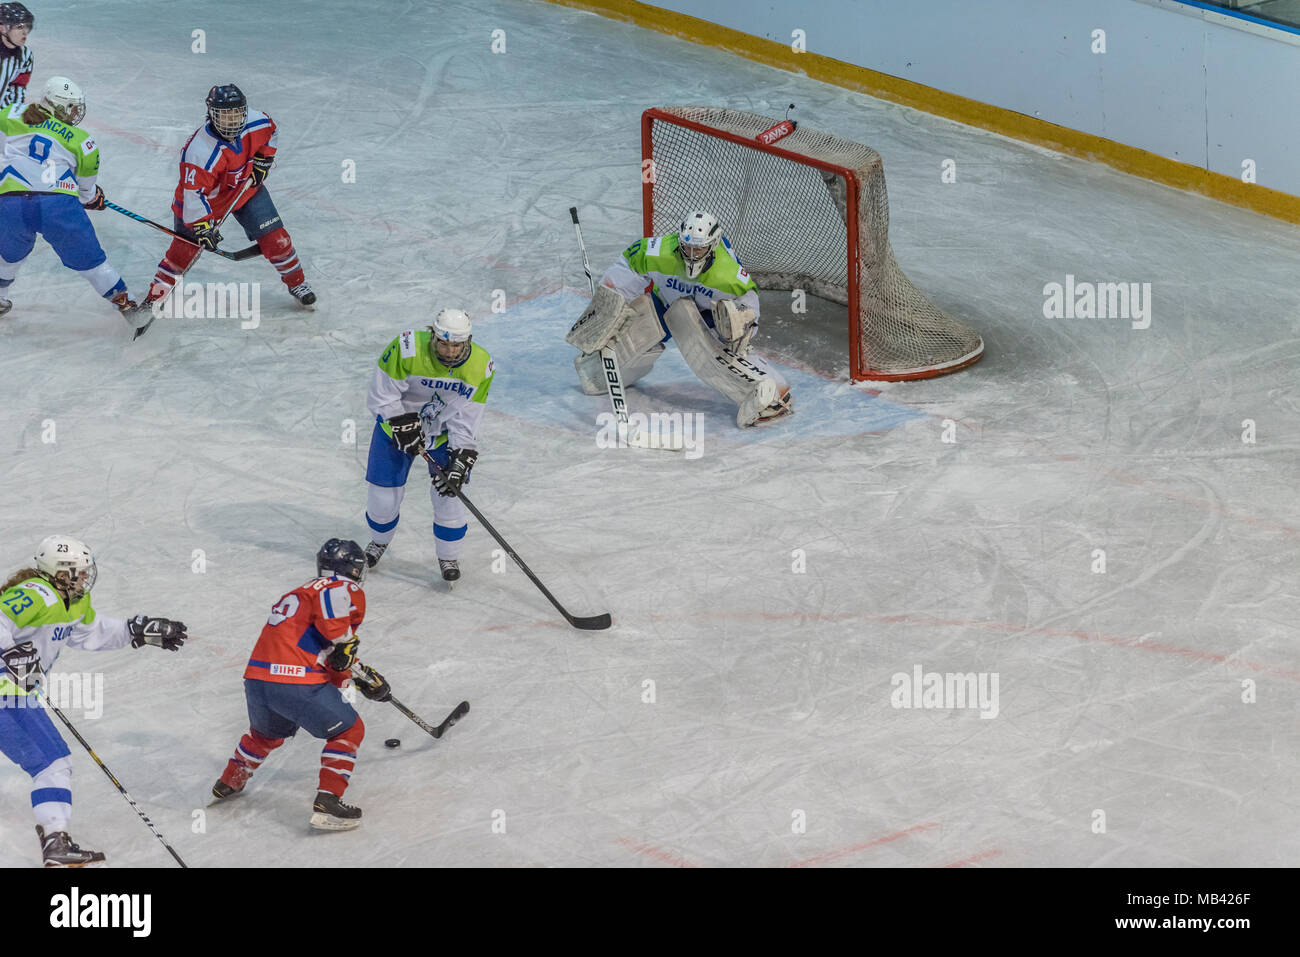 Ice hockey iihf 2018 hi-res stock photography and images - Alamy